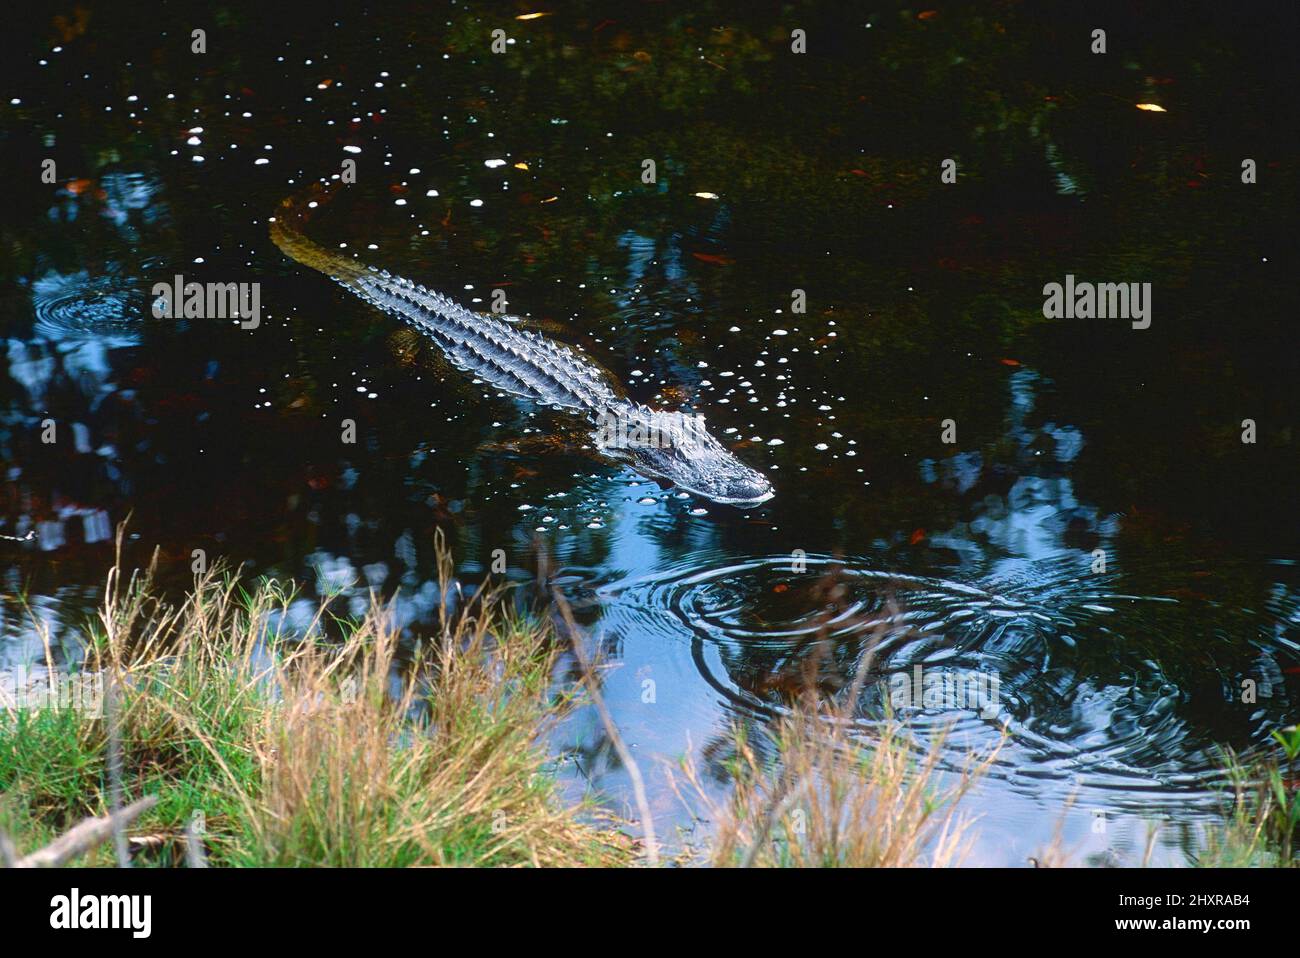 Mississippi-Alligator, Alligator mississippiensis, Alligatoridae, Echse, Reptil, Tier, Everglades Nationalpark, Florida, USA Stock Photo